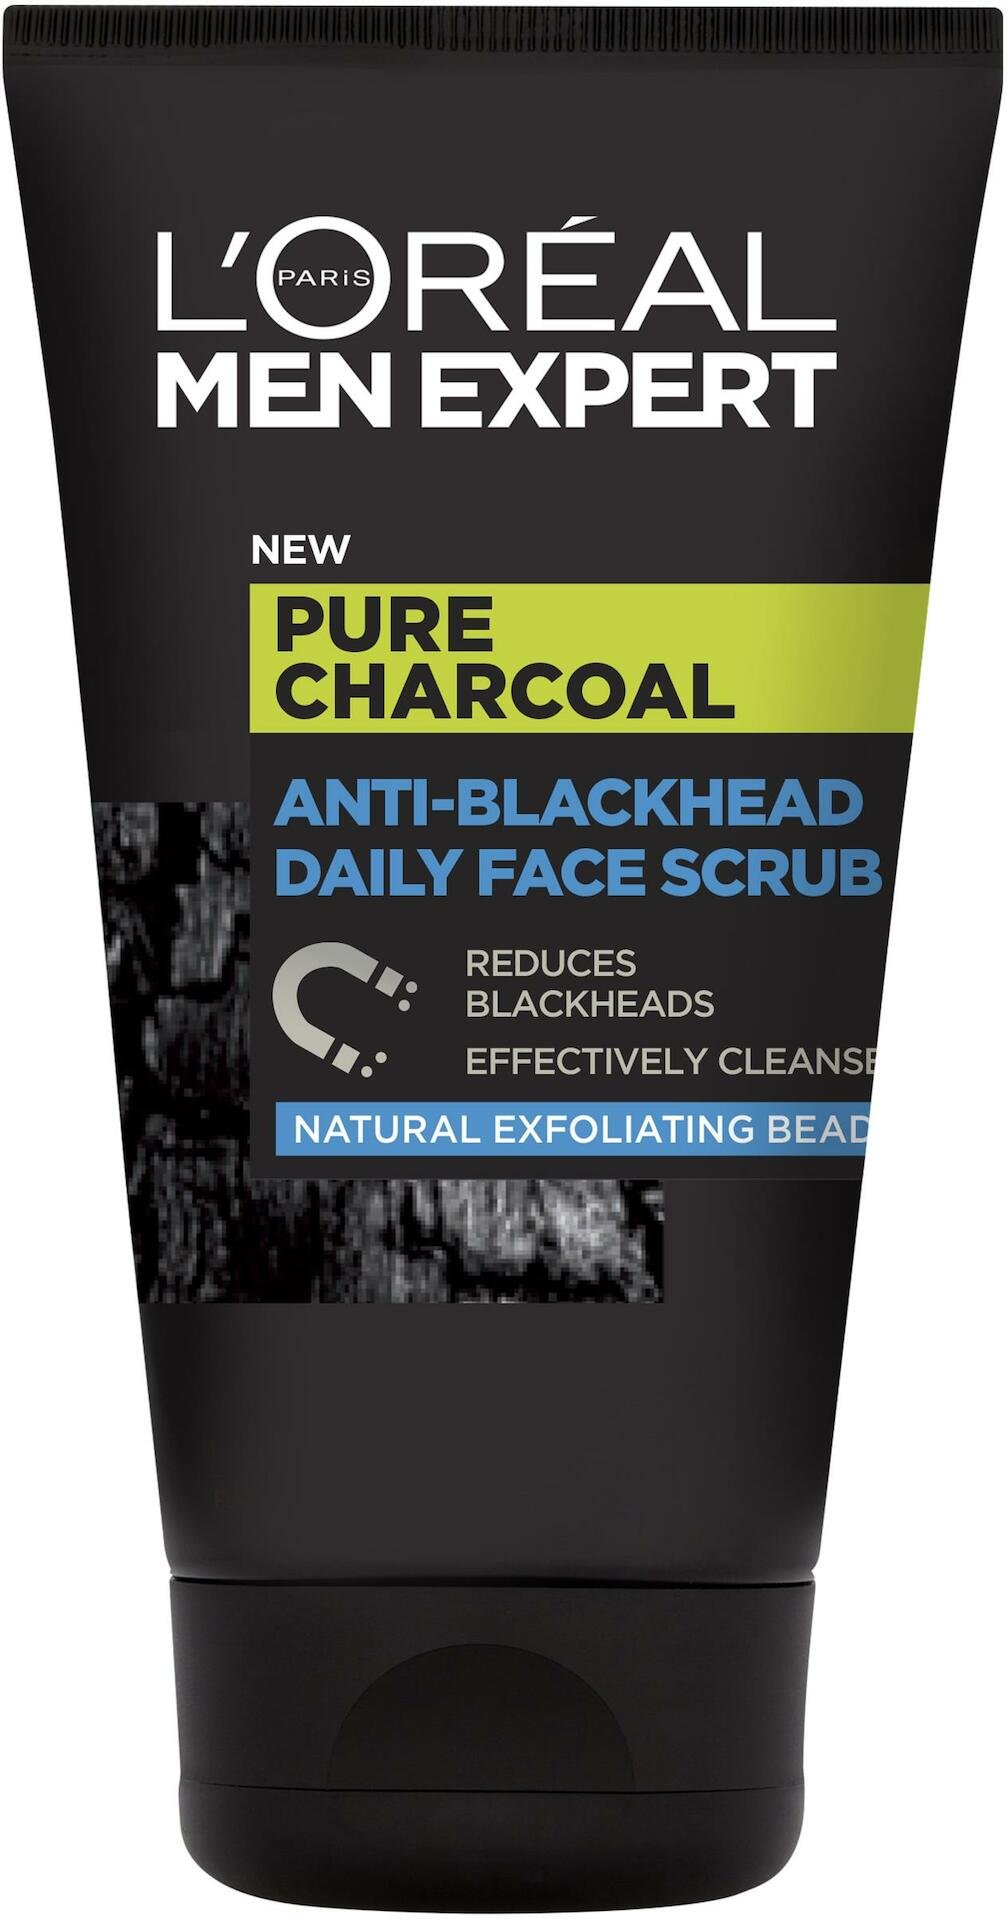 L'Oréal Paris Men Expert Pure Carbon Anti-Blackhead Daily Face Scrub 100 ml